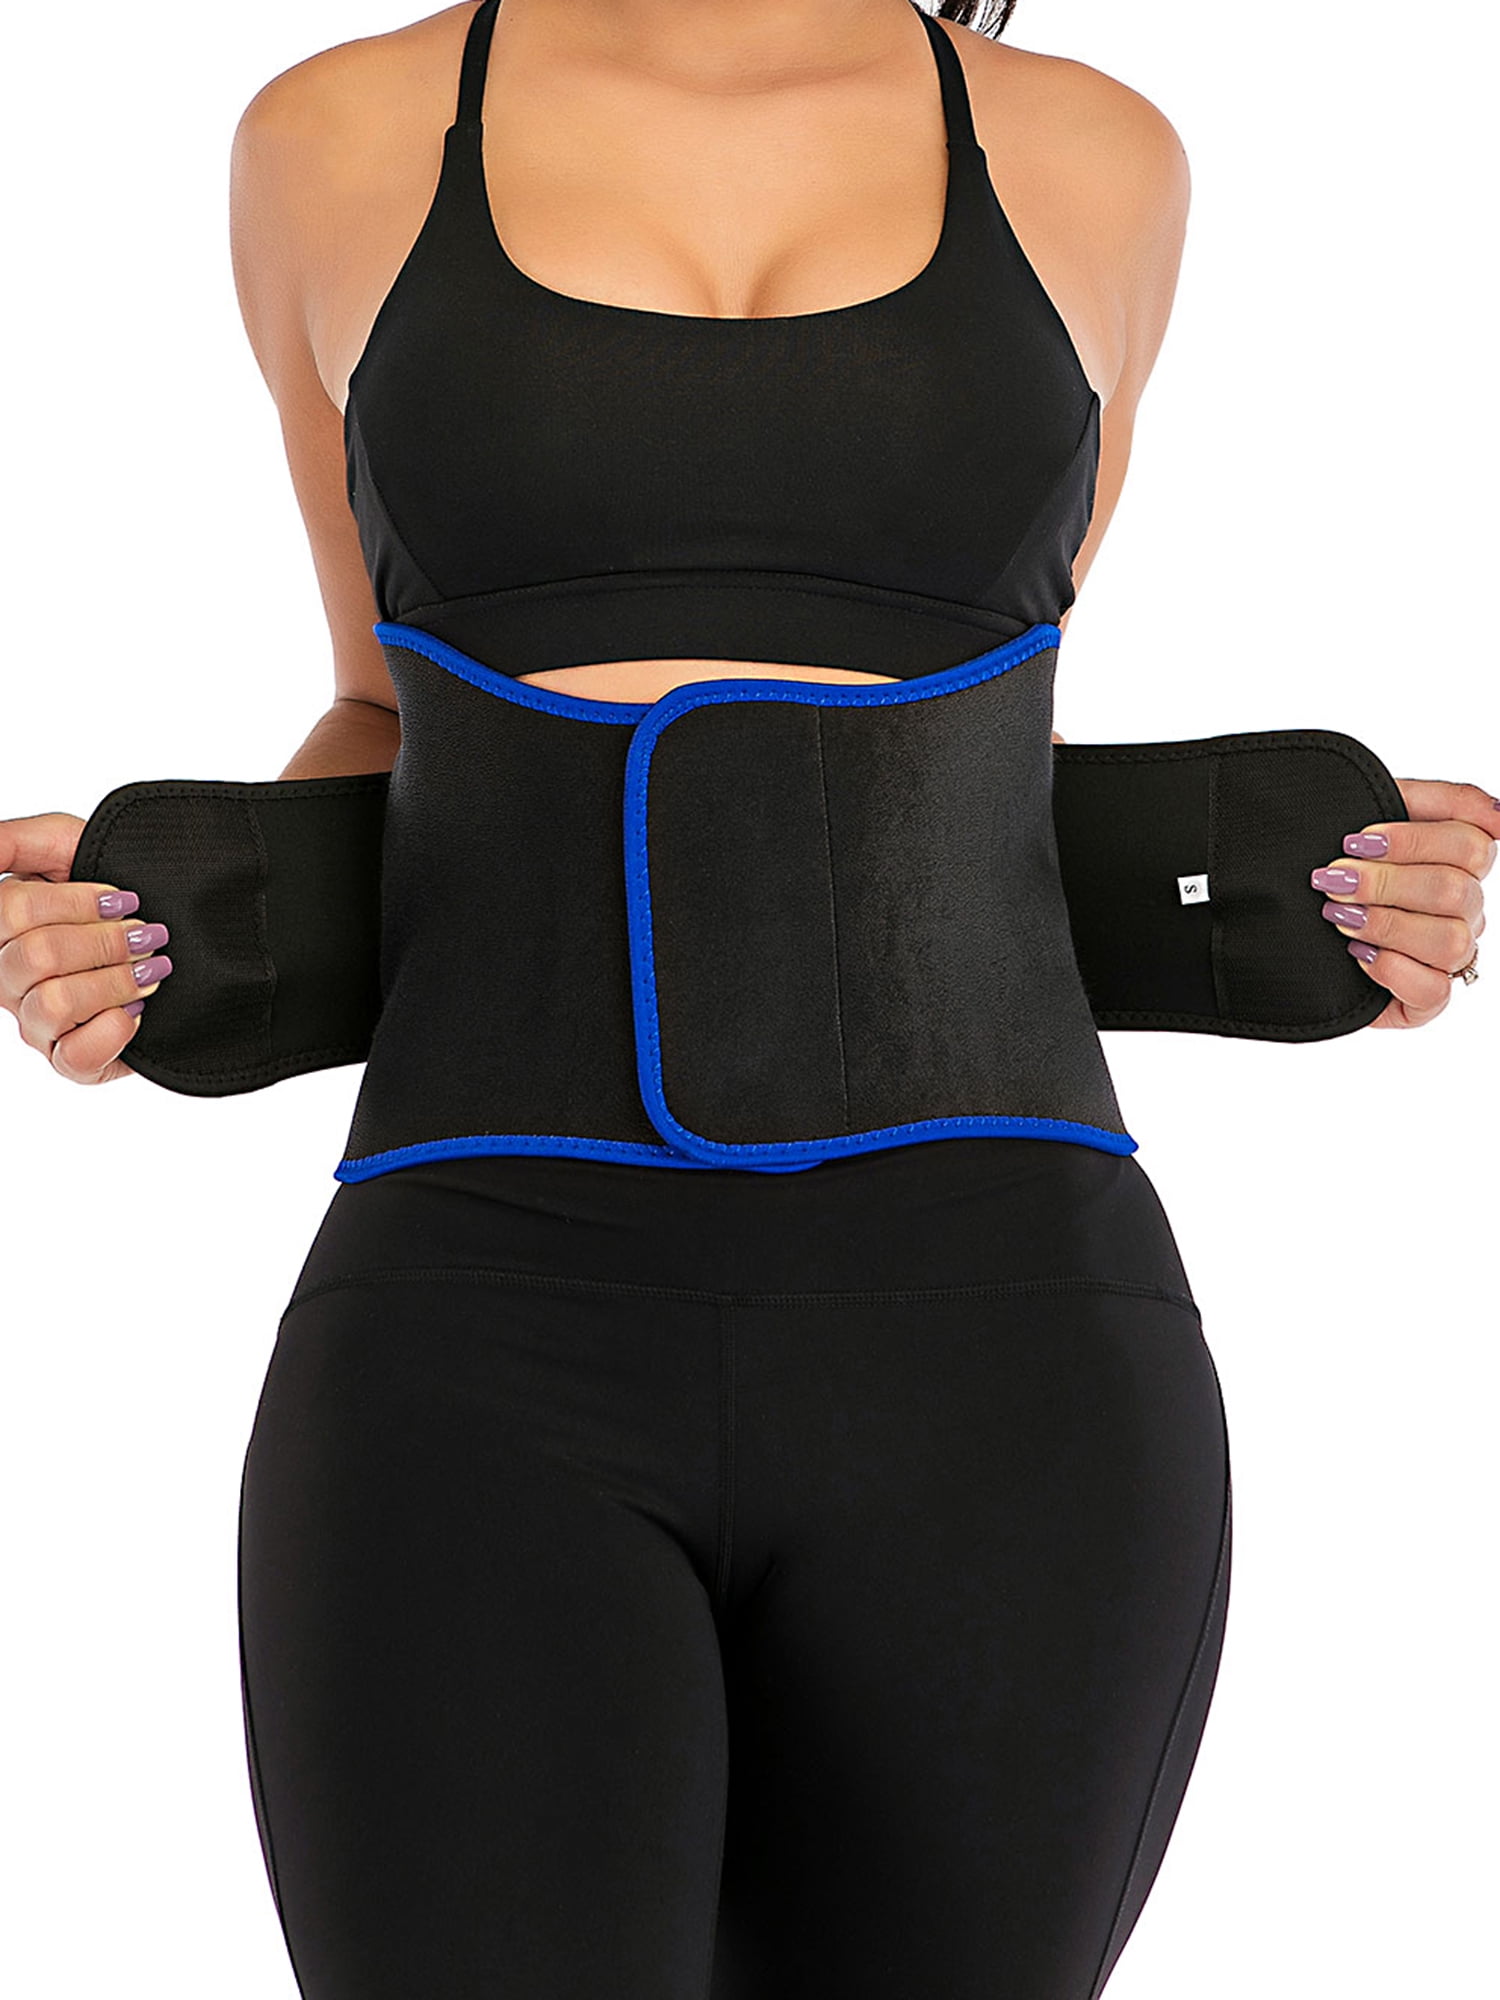 Details about   Brand new fit-n-run original fitness waist belt medium black 